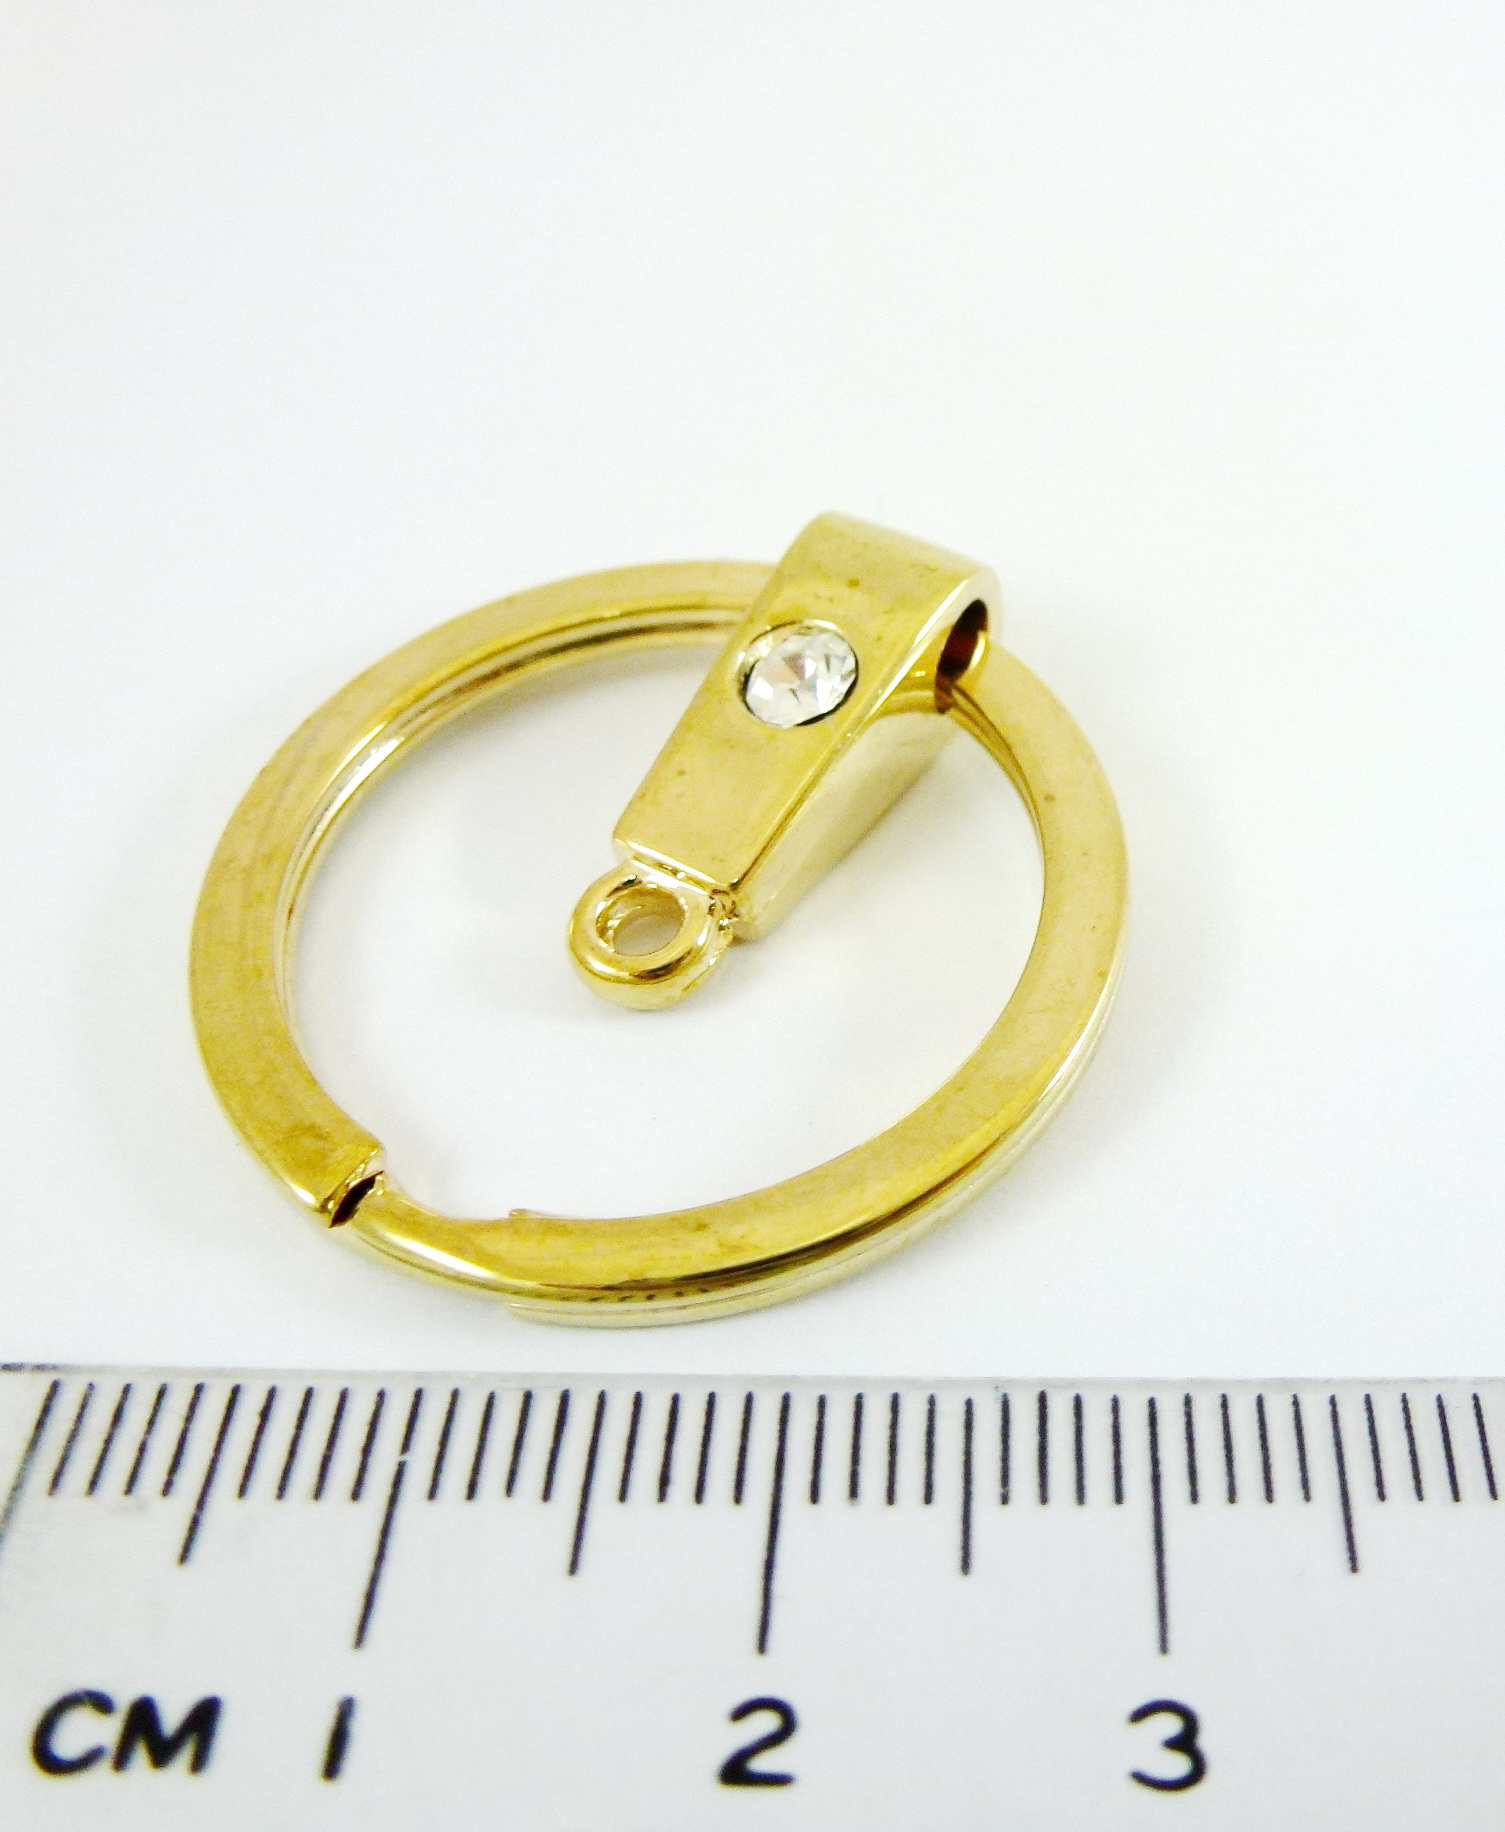 30mm銅鍍金色圓形雙圈加T形墜鑰匙圈